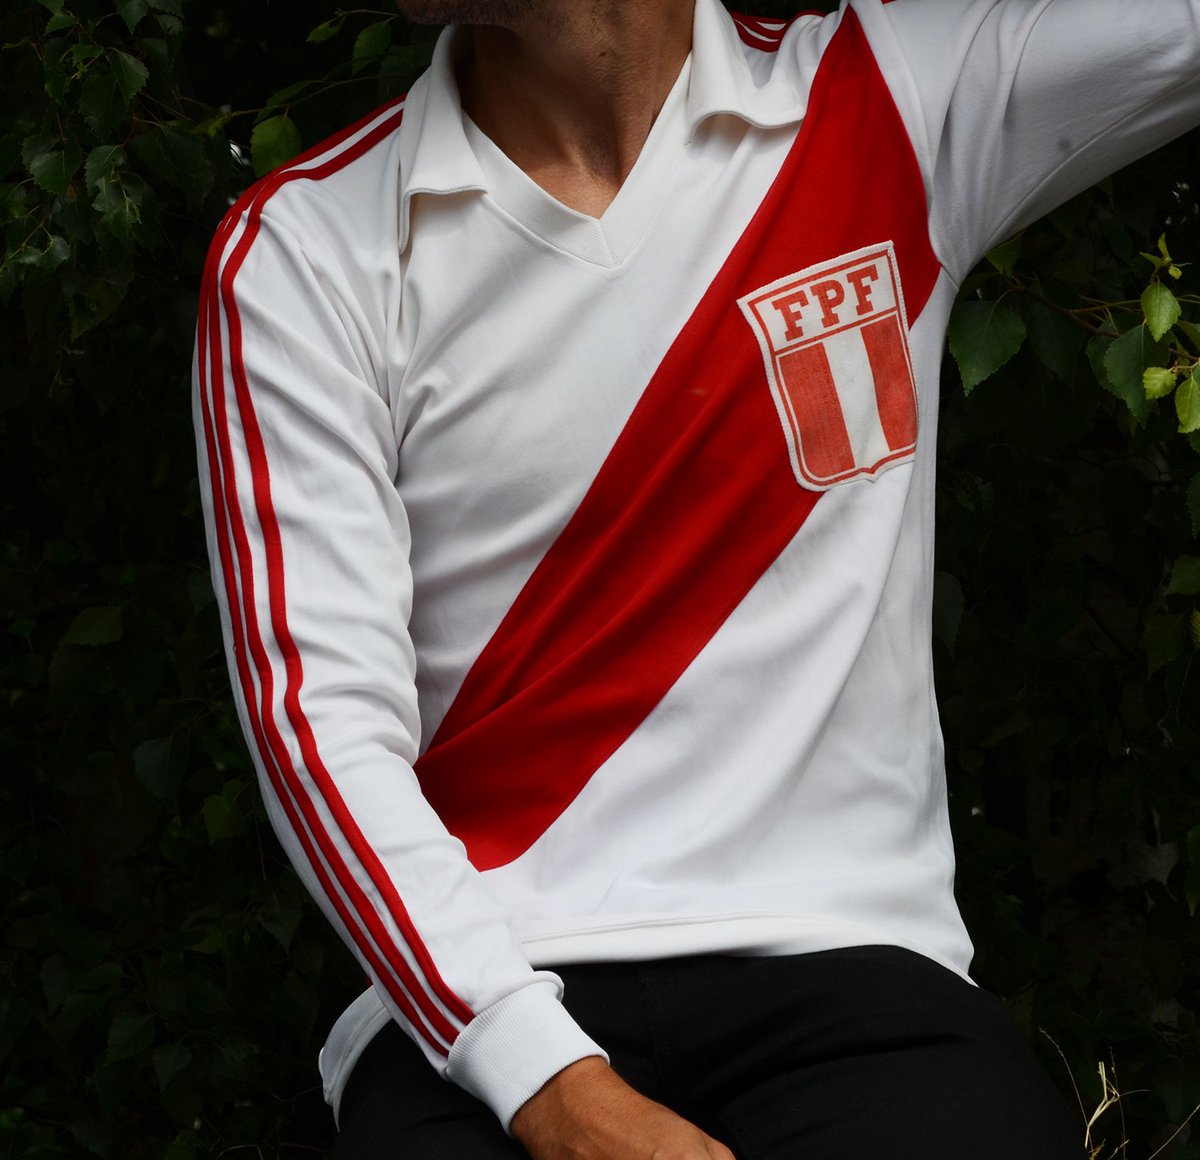 Peru national team retro jerseys